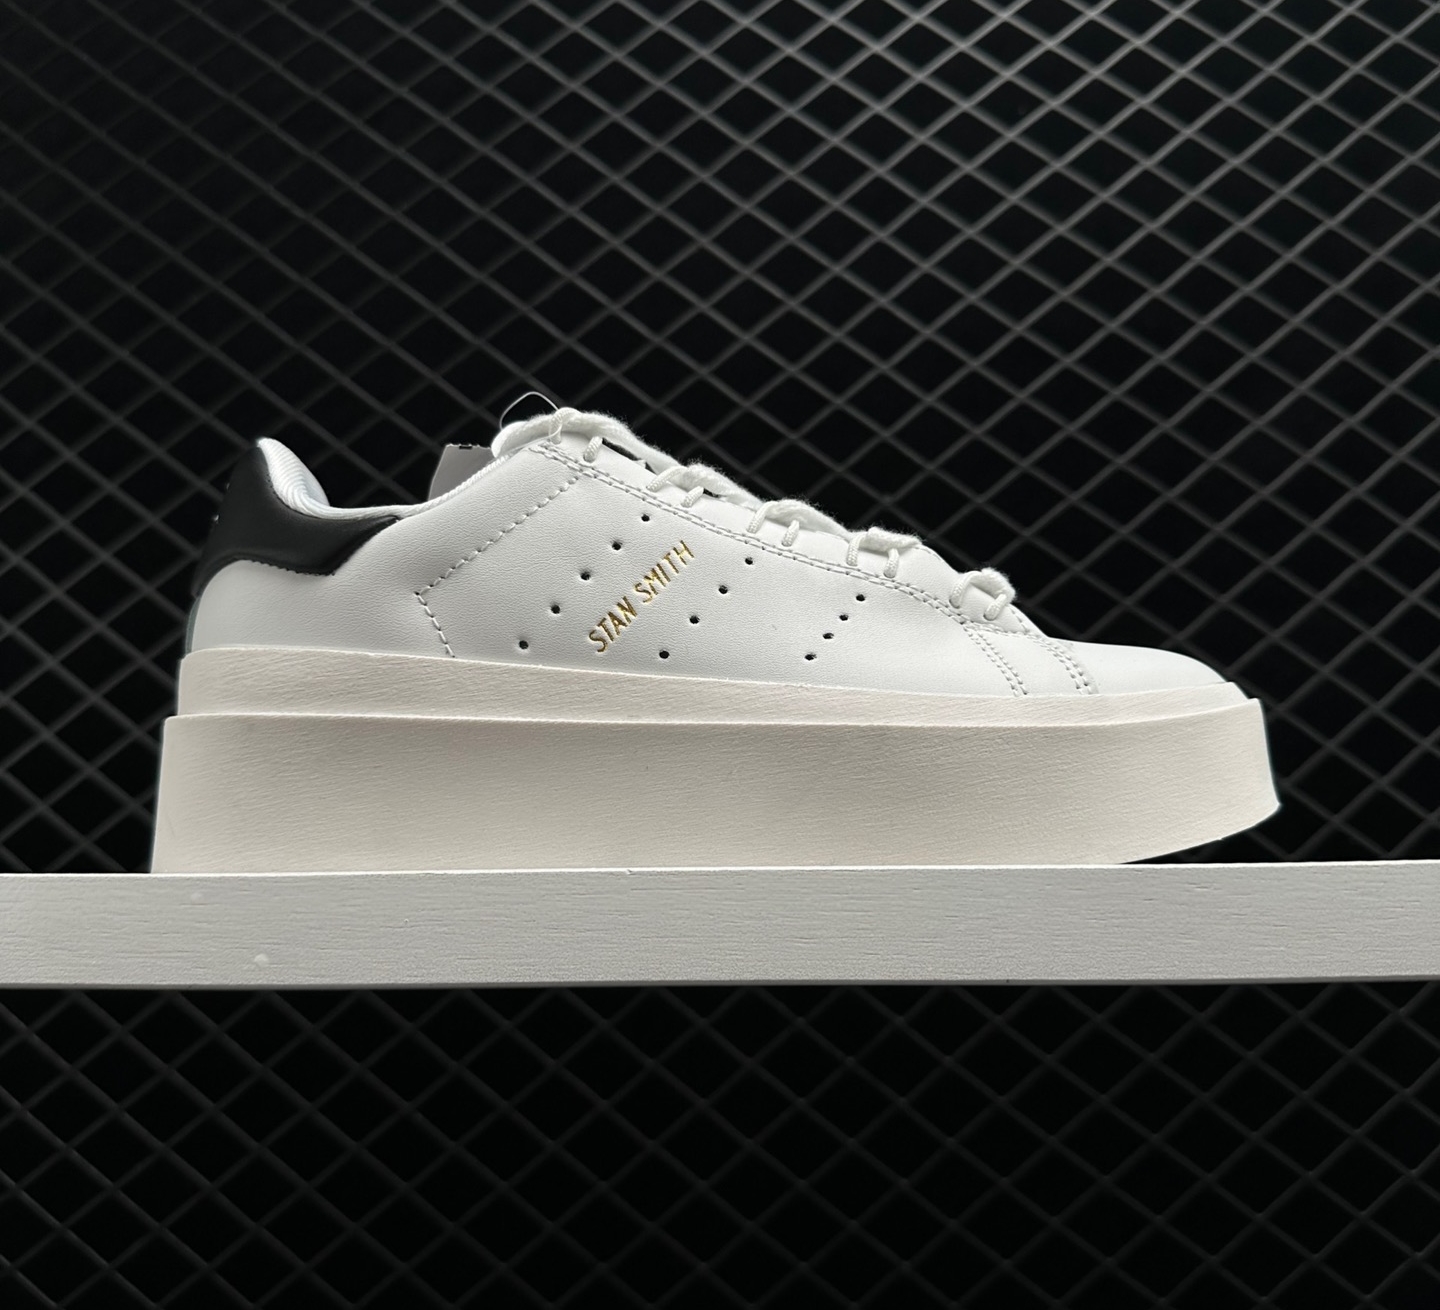 Adidas Stan Smith Bonega: White Black Colorway for Stylish Sneaker Lovers